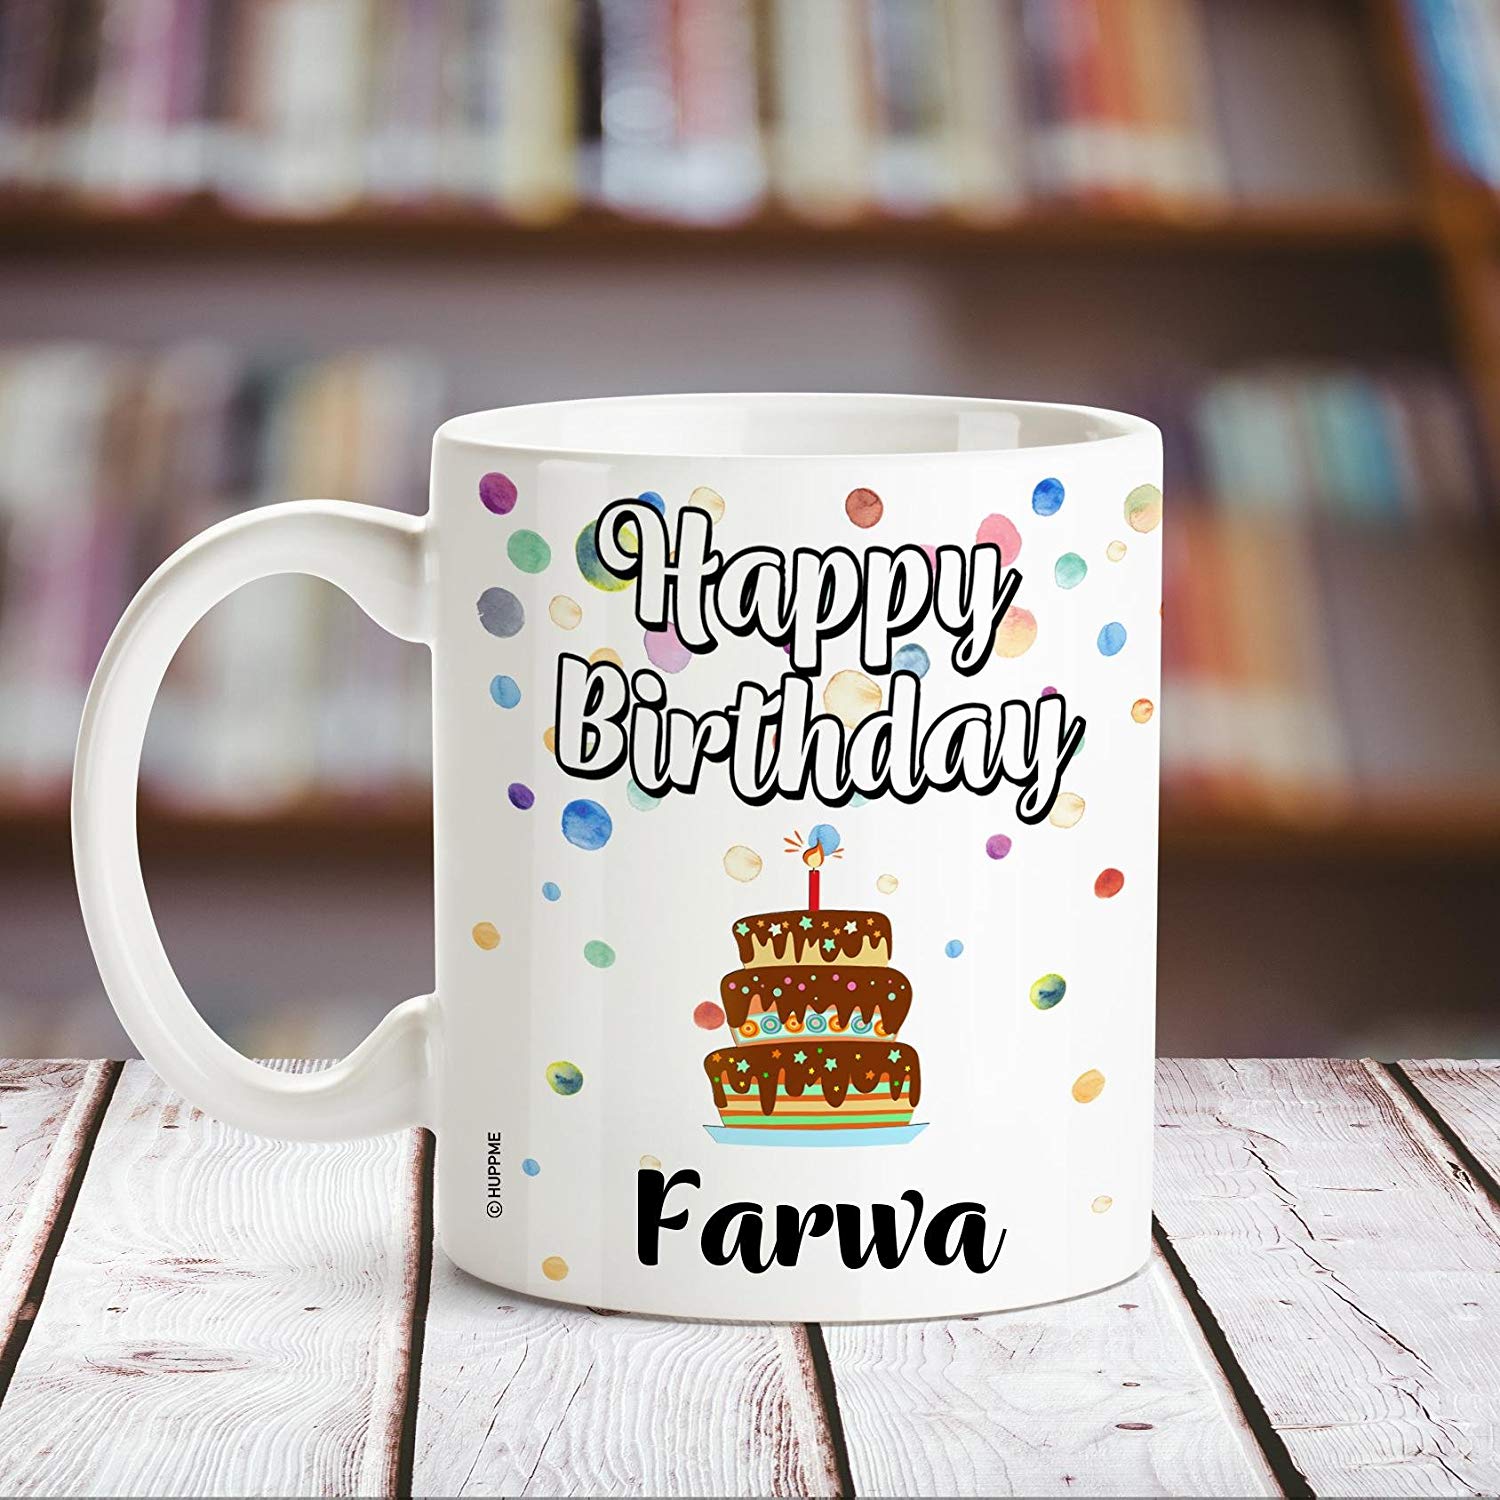 Happy Birthday Farwa Name - Happy Birthday Cake With Name Farwa , HD Wallpaper & Backgrounds